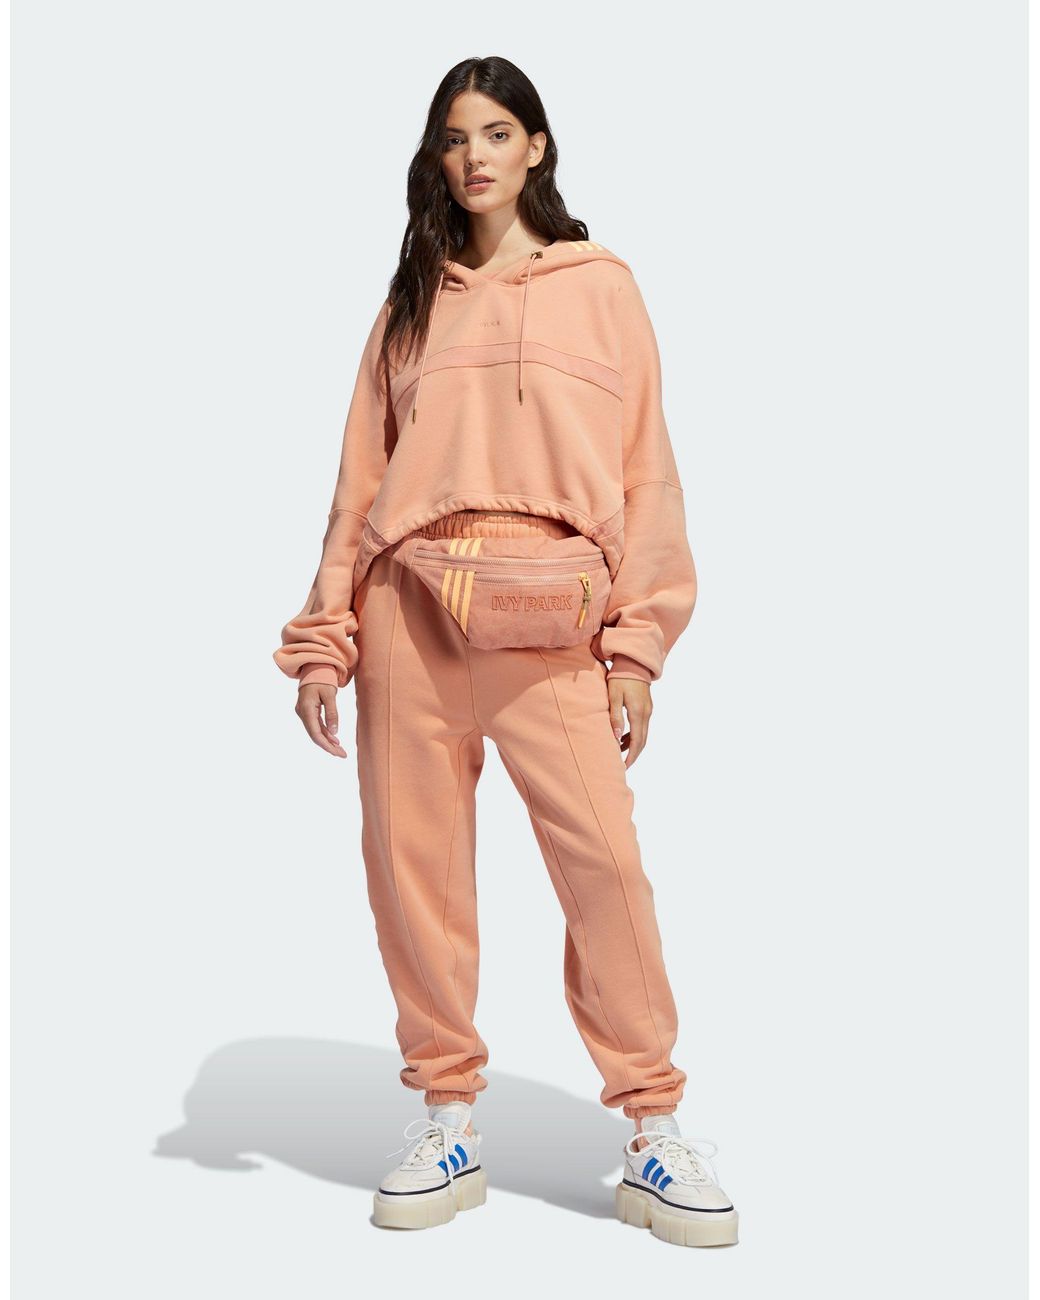 Ivy Park Adidas Originals X Cropped Hoodie in Pink | Lyst